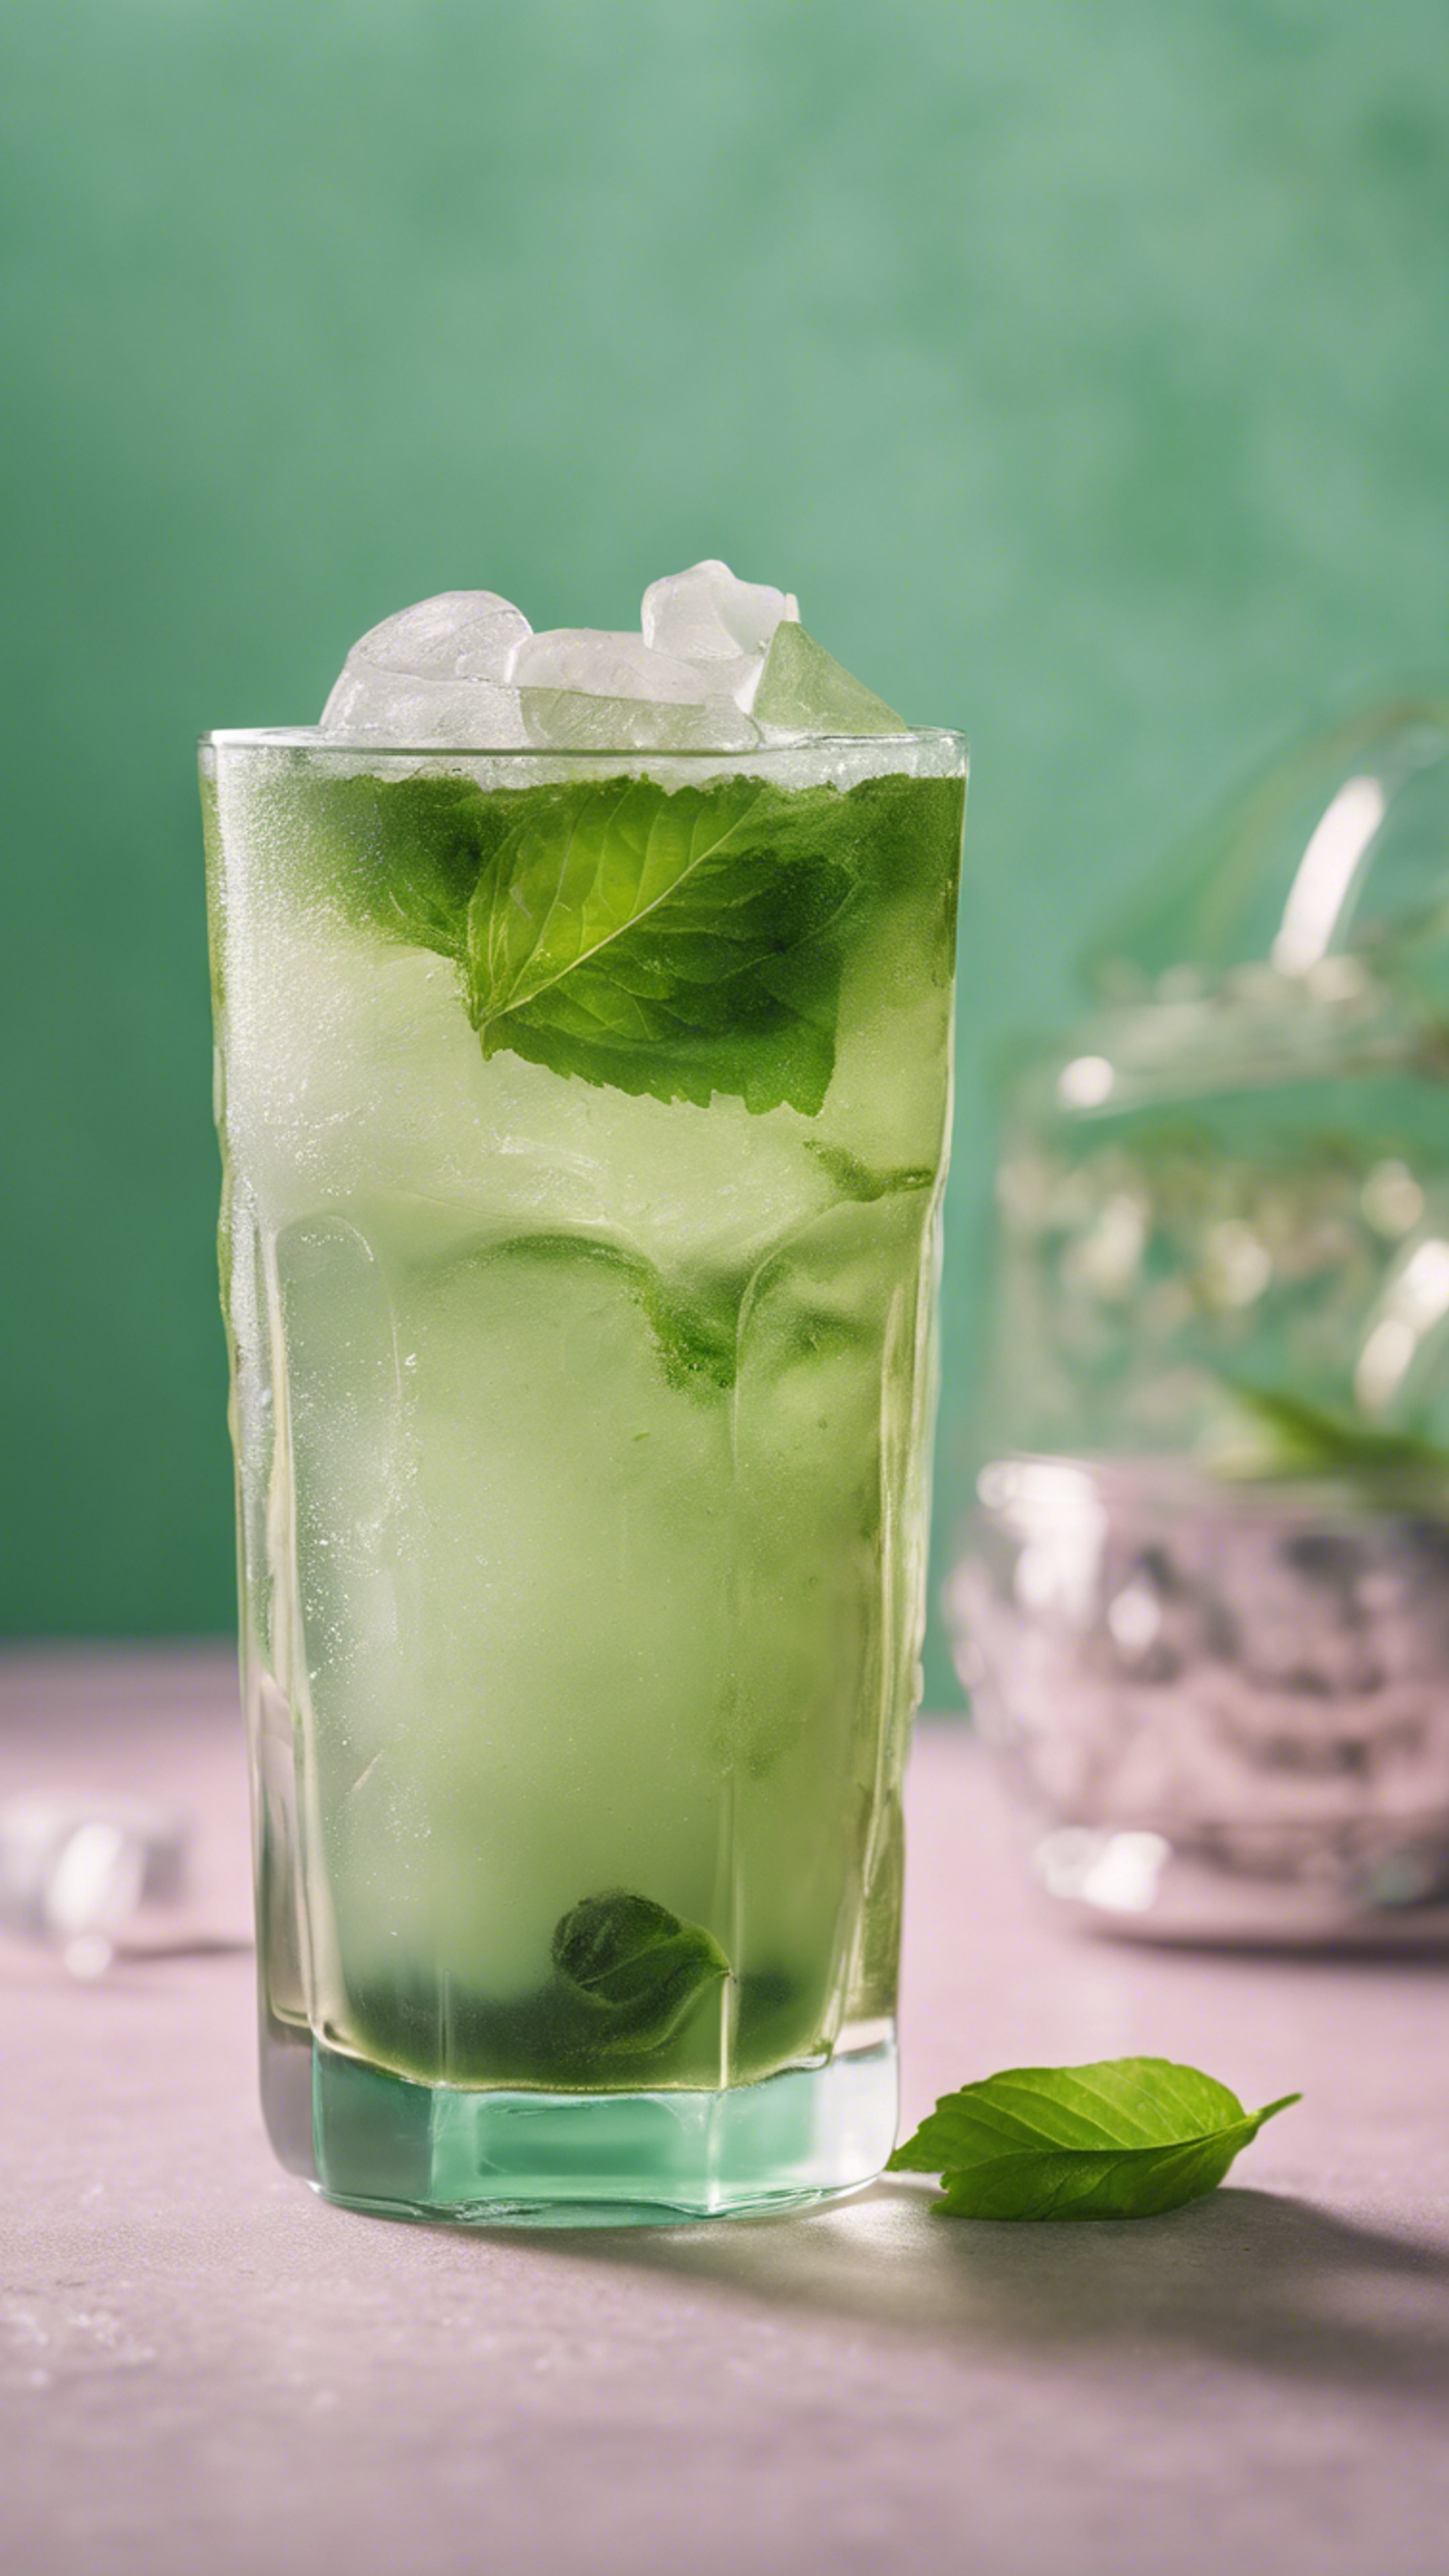 Glass of iced Matcha green tea against a pastel mint background. Wallpaper[6660fda5a39d4a389fde]